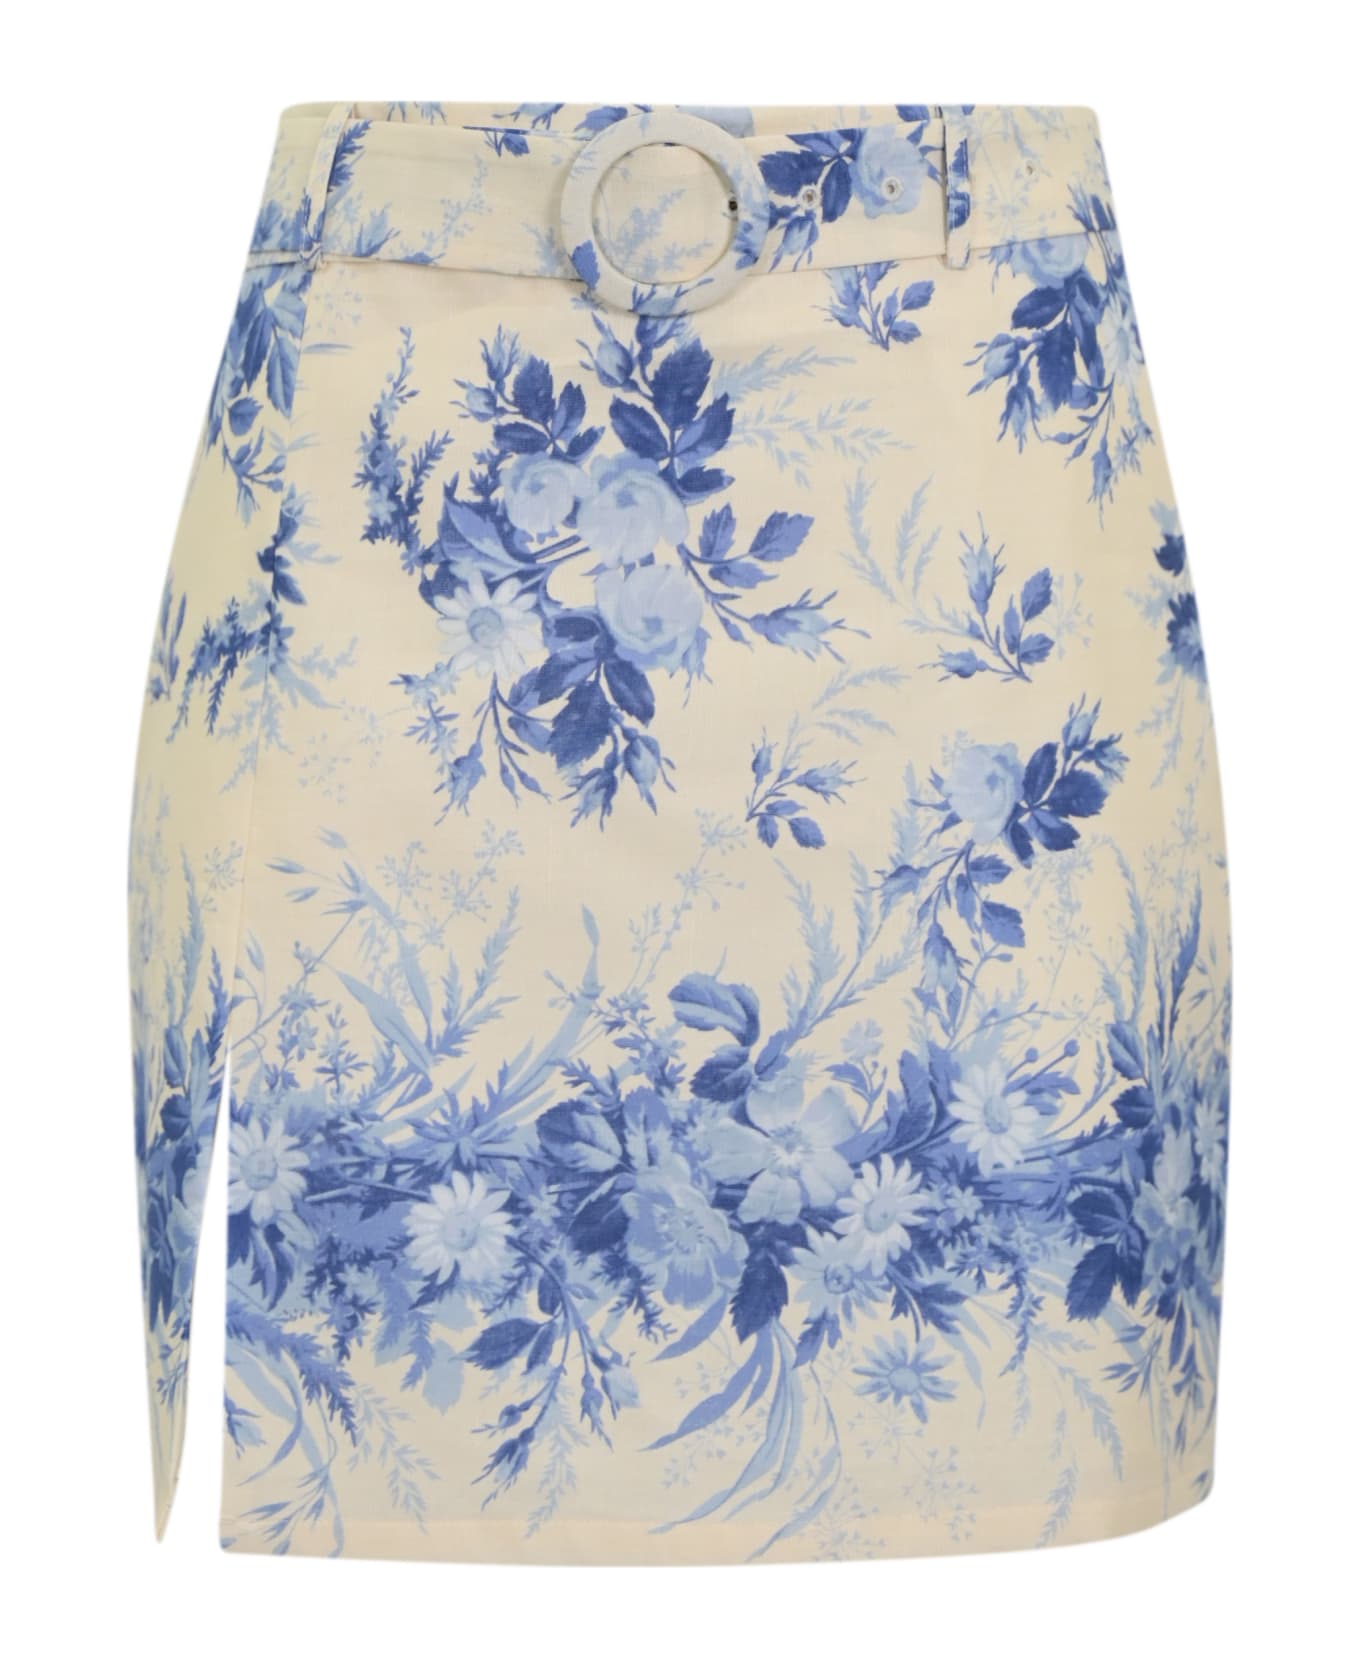 TwinSet Linen Skirt With Print - Avorio/blu